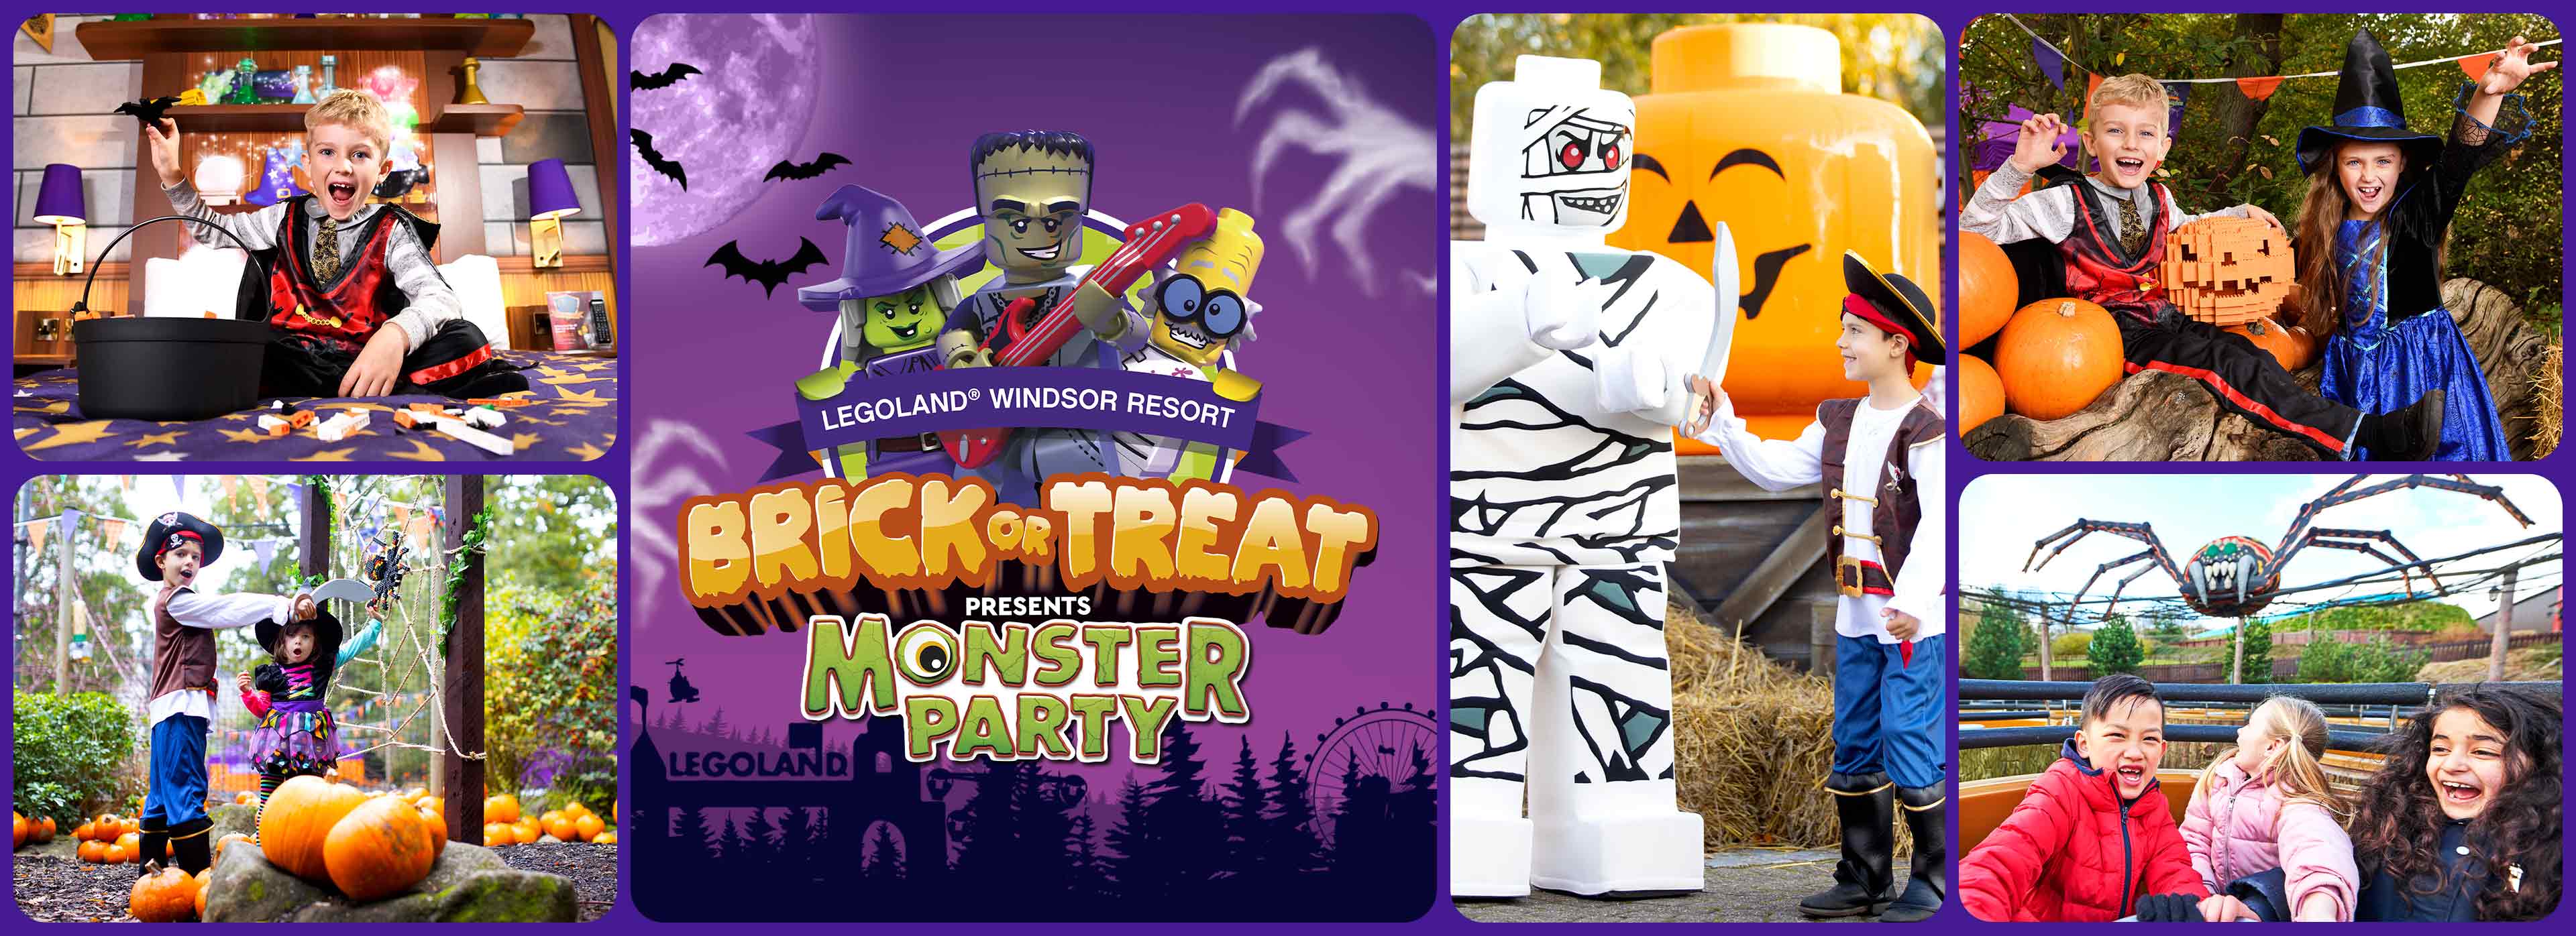 Brick or treat Halloween event at the LEGOLAND Windsor Resort